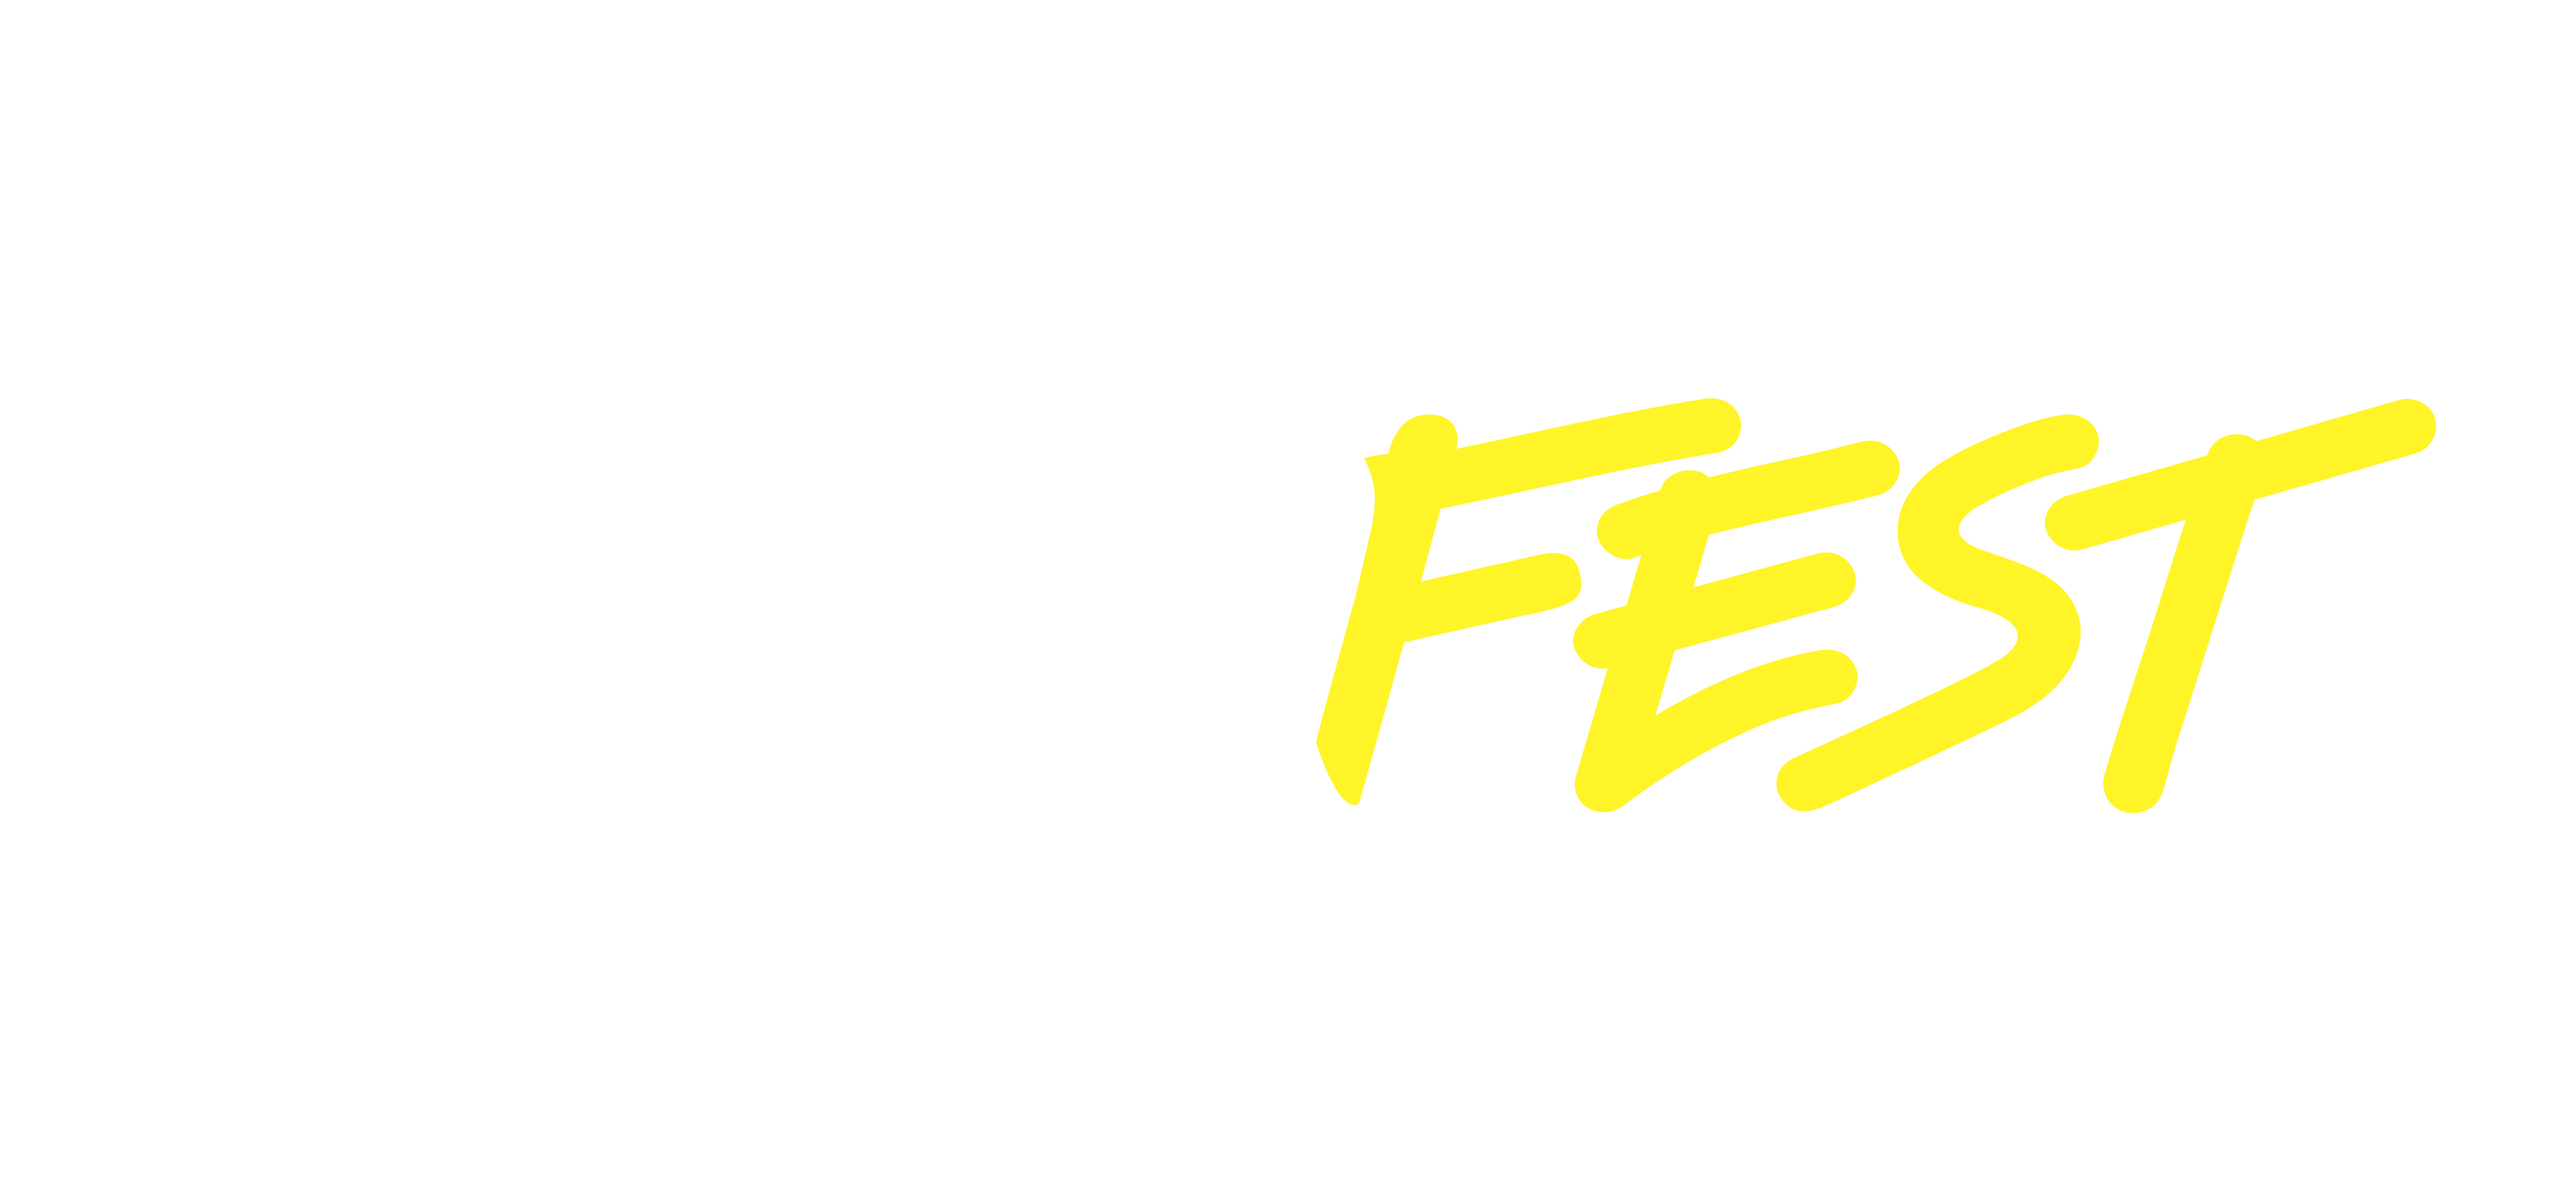 The Crew Motorfest - Wikipedia